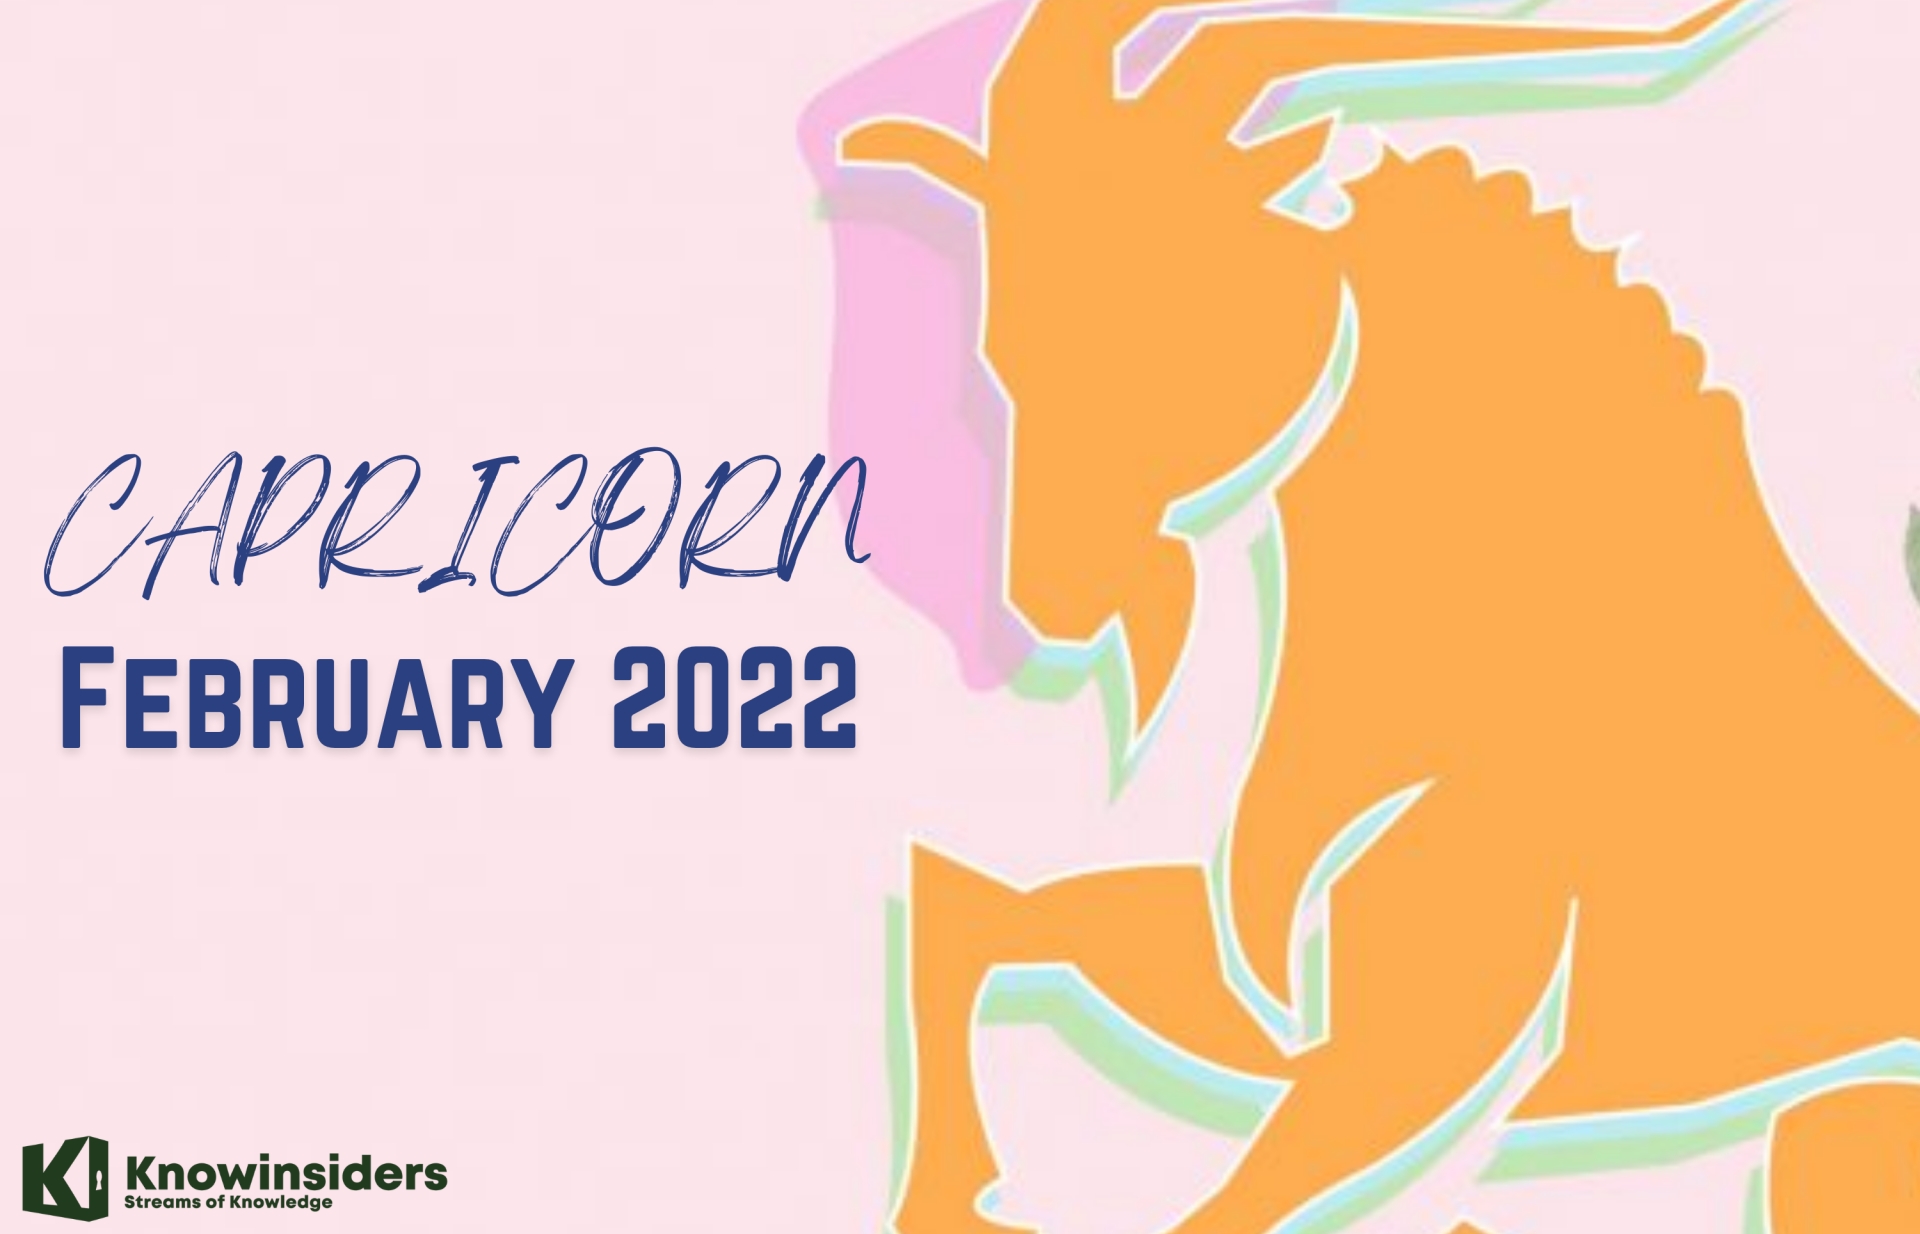 capricorn february 2022 horoscope monthly prediction for love career money and health